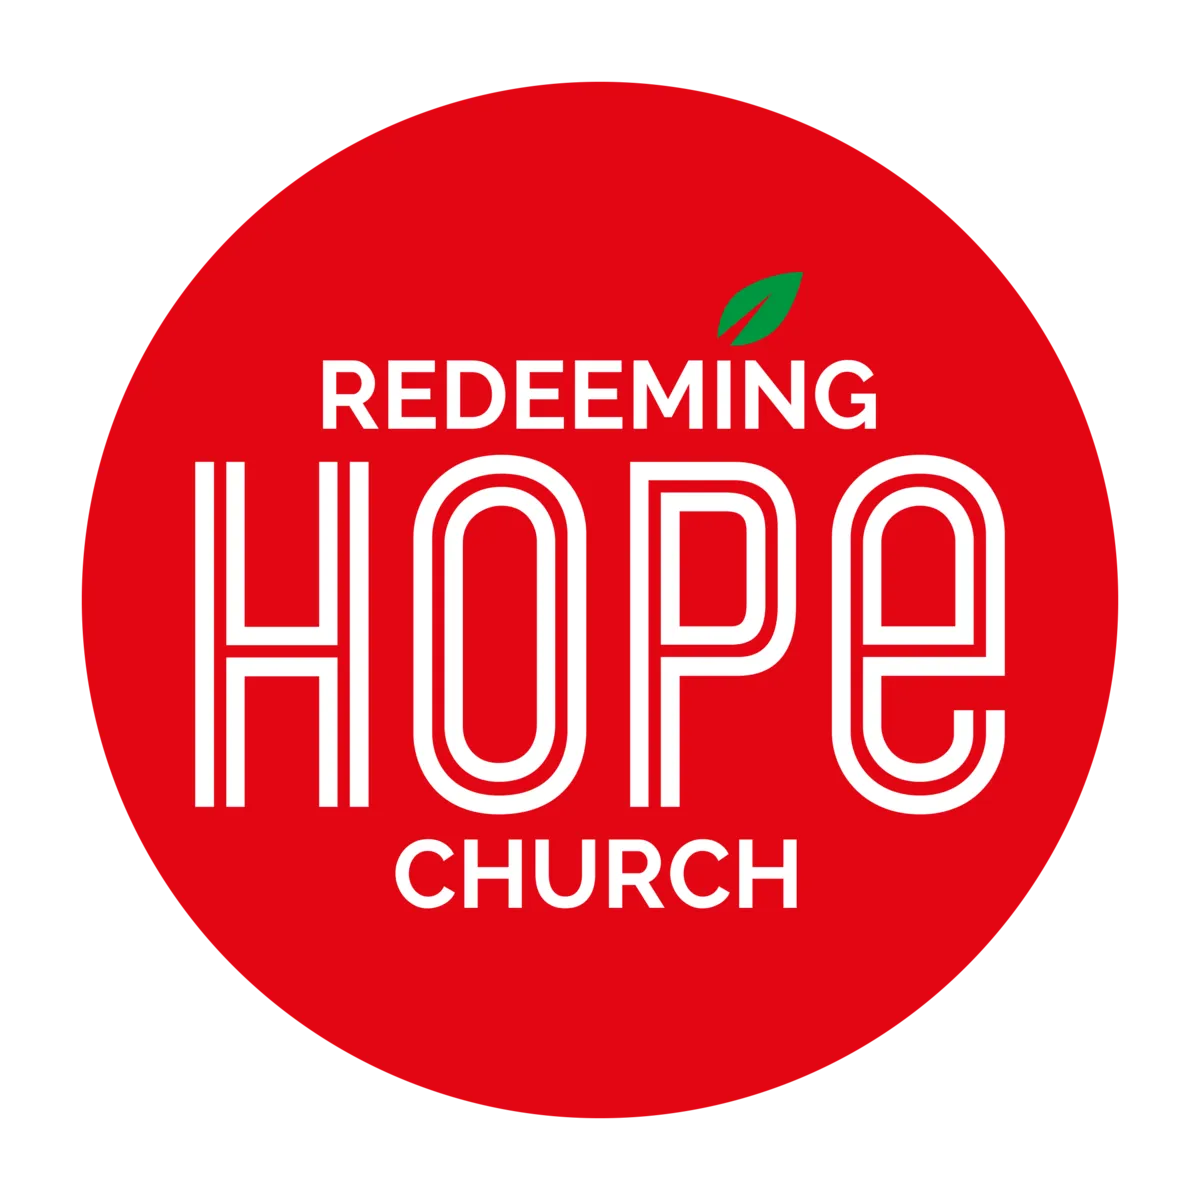 Redeeming Hope Church